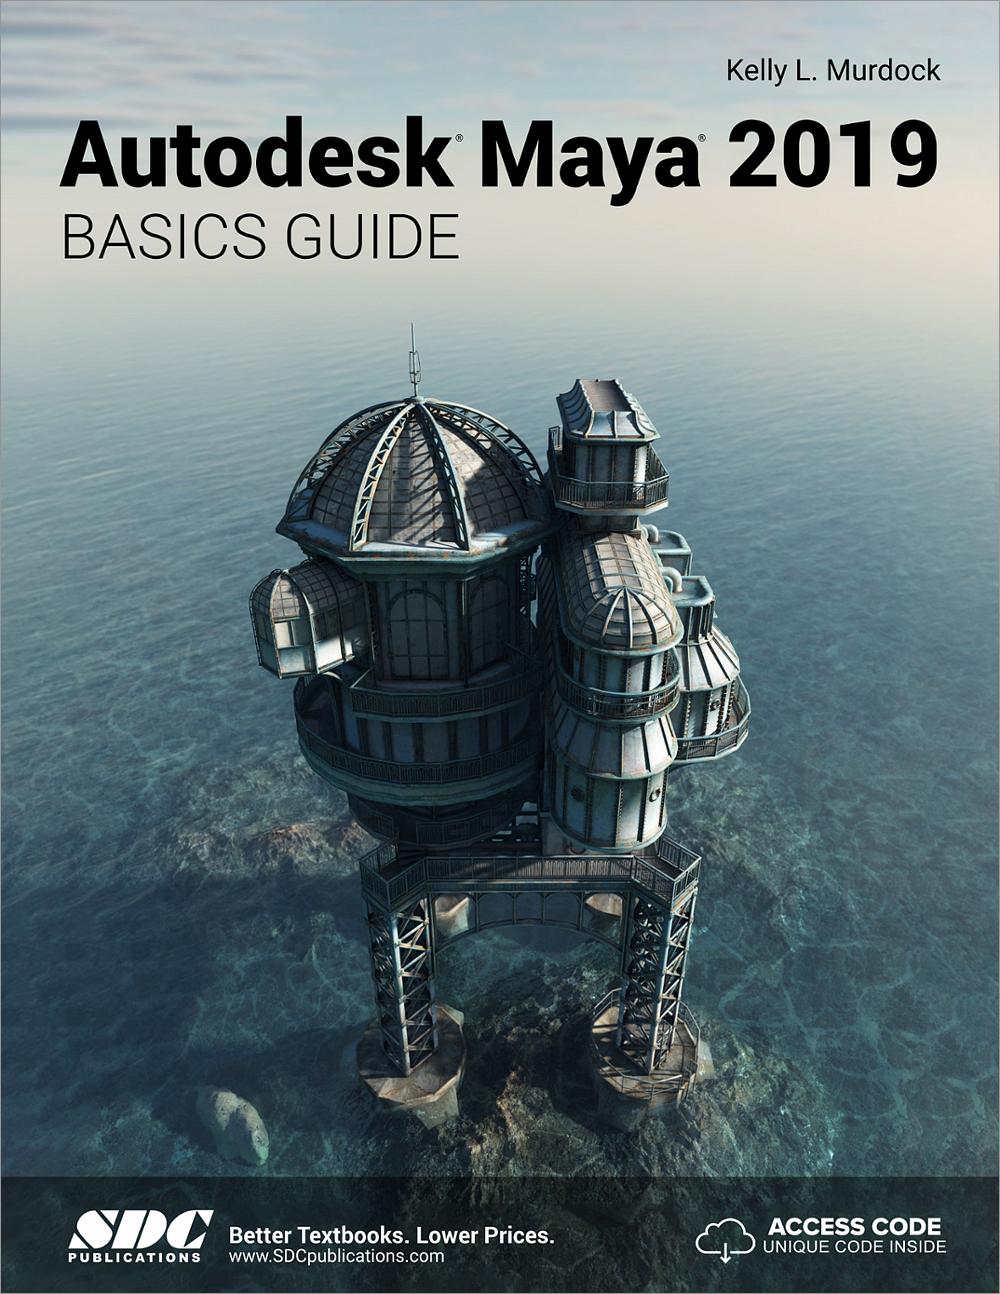 autodesk maya lt 2020 price